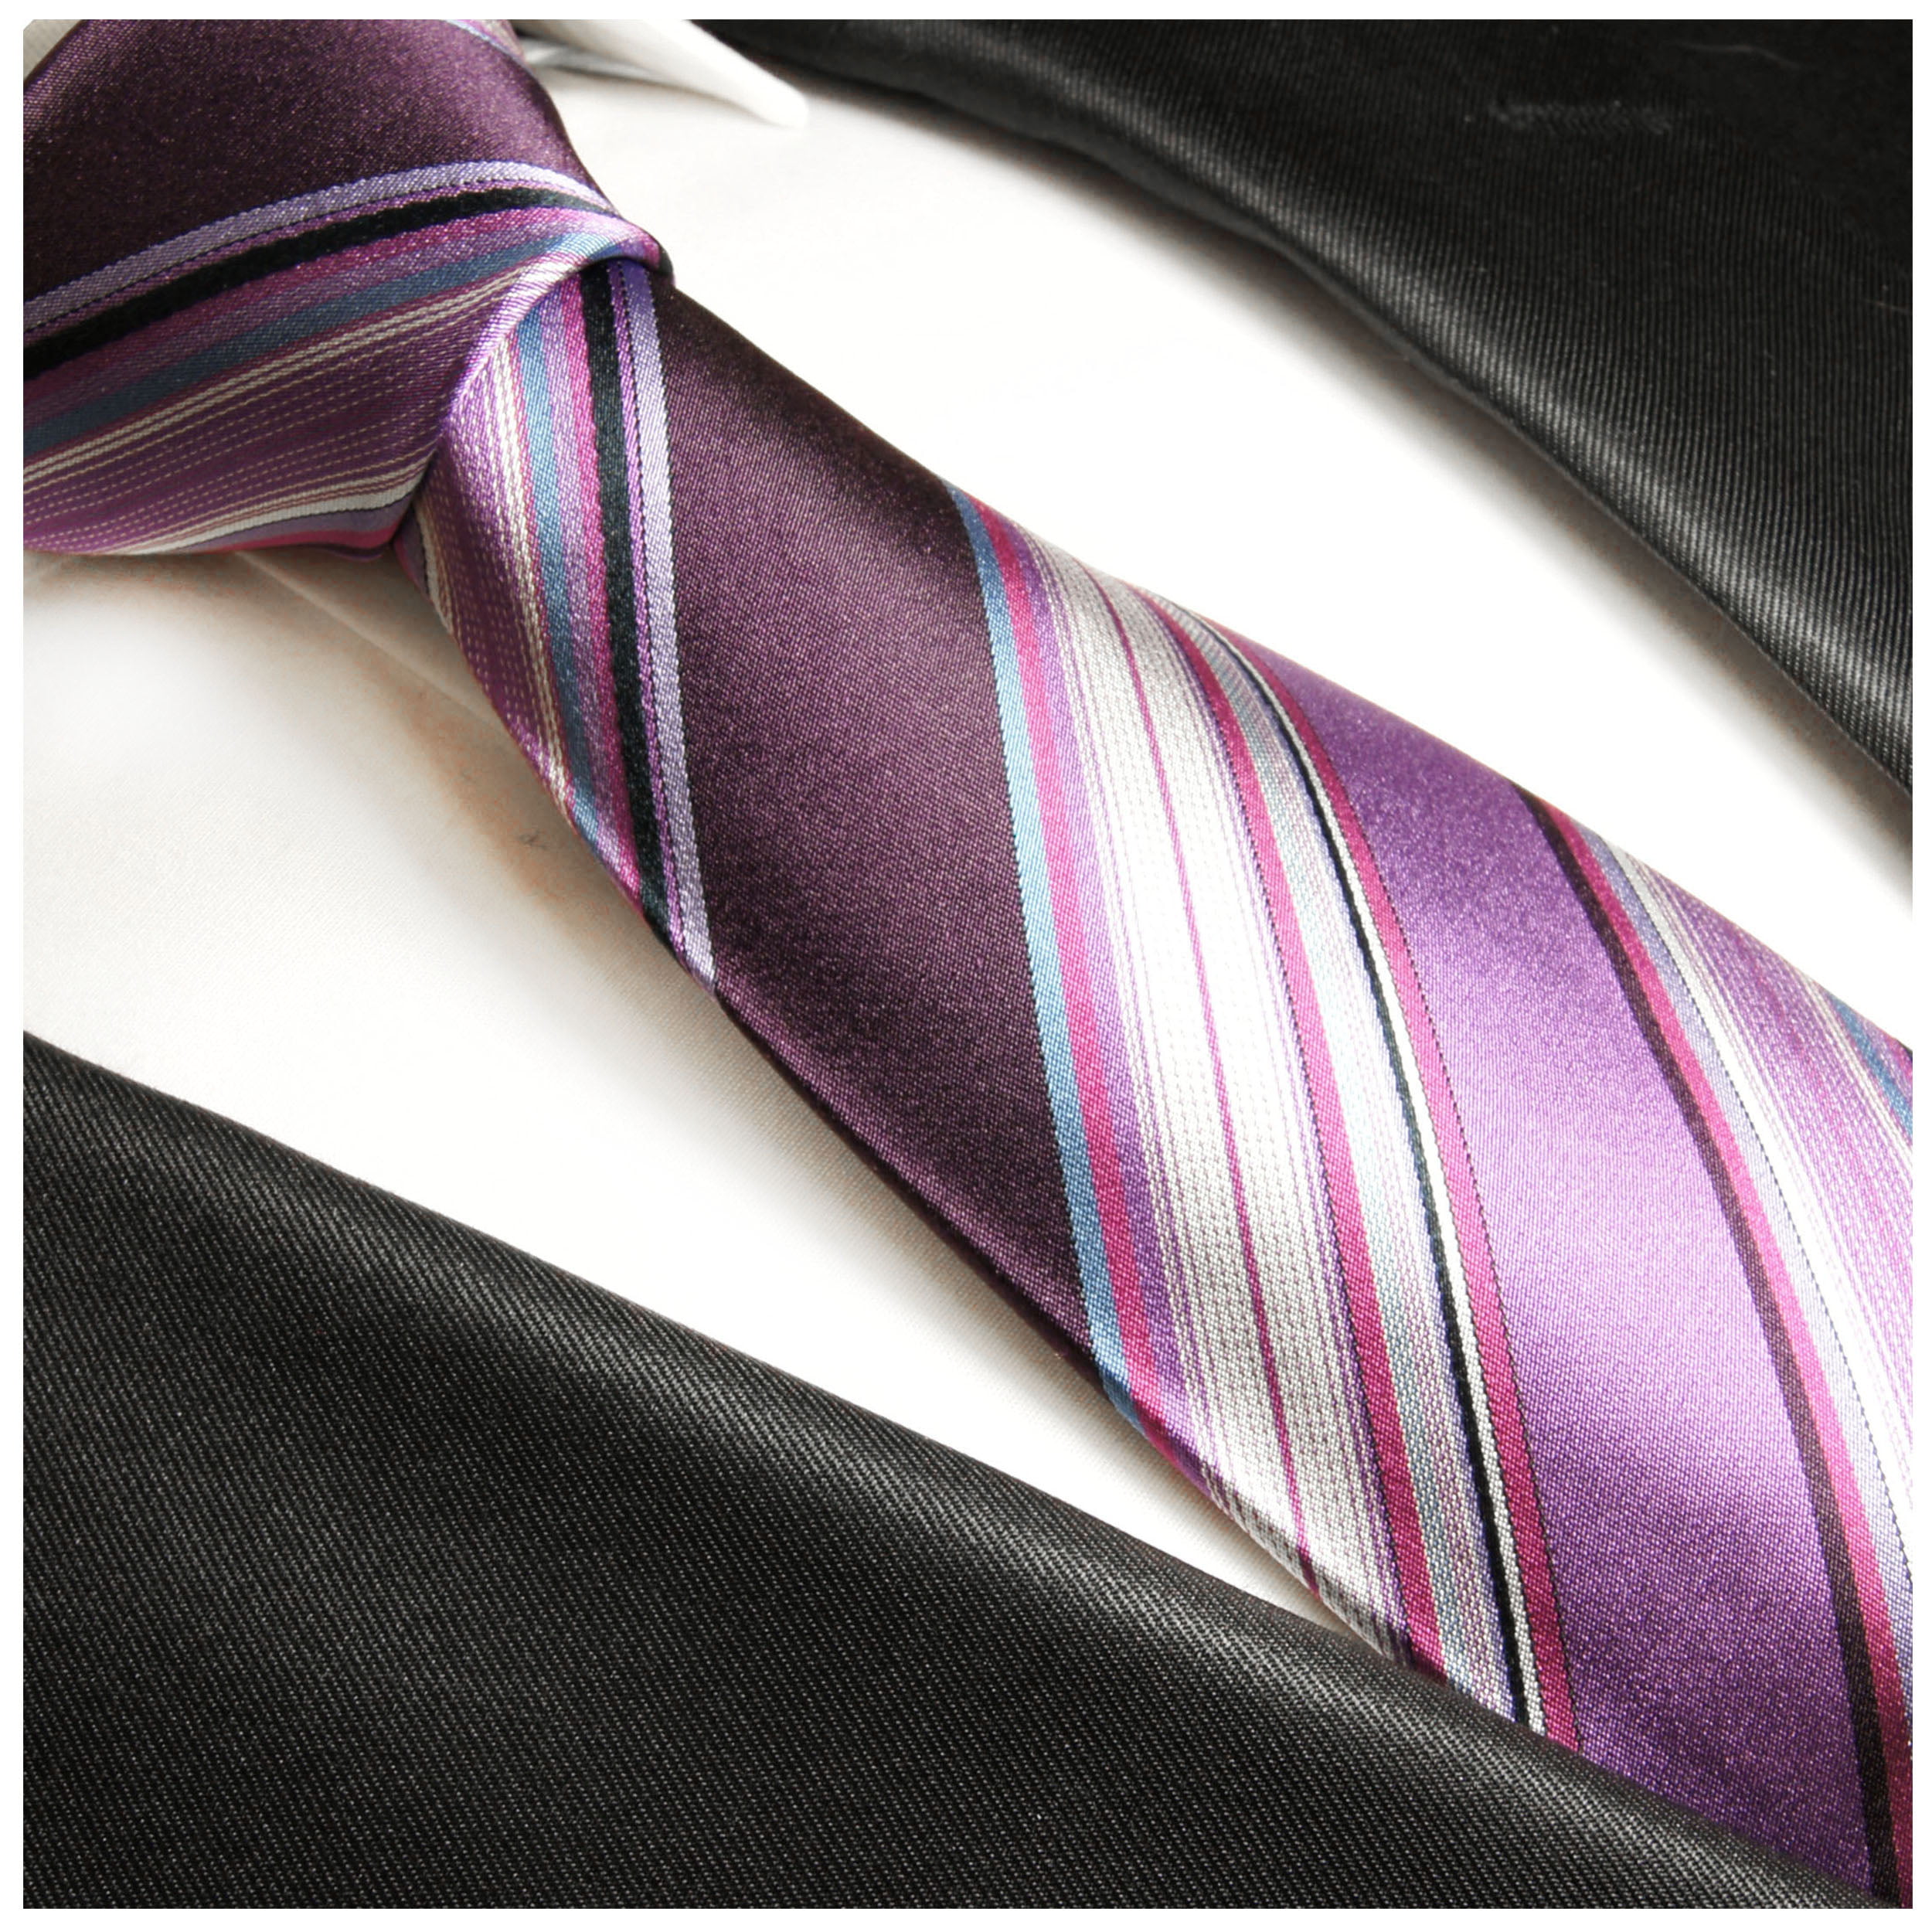 Paisley /& Striped Details about  / Colibryan Cufflinks Pocket Square//Scarf /&Necktie Purple Set